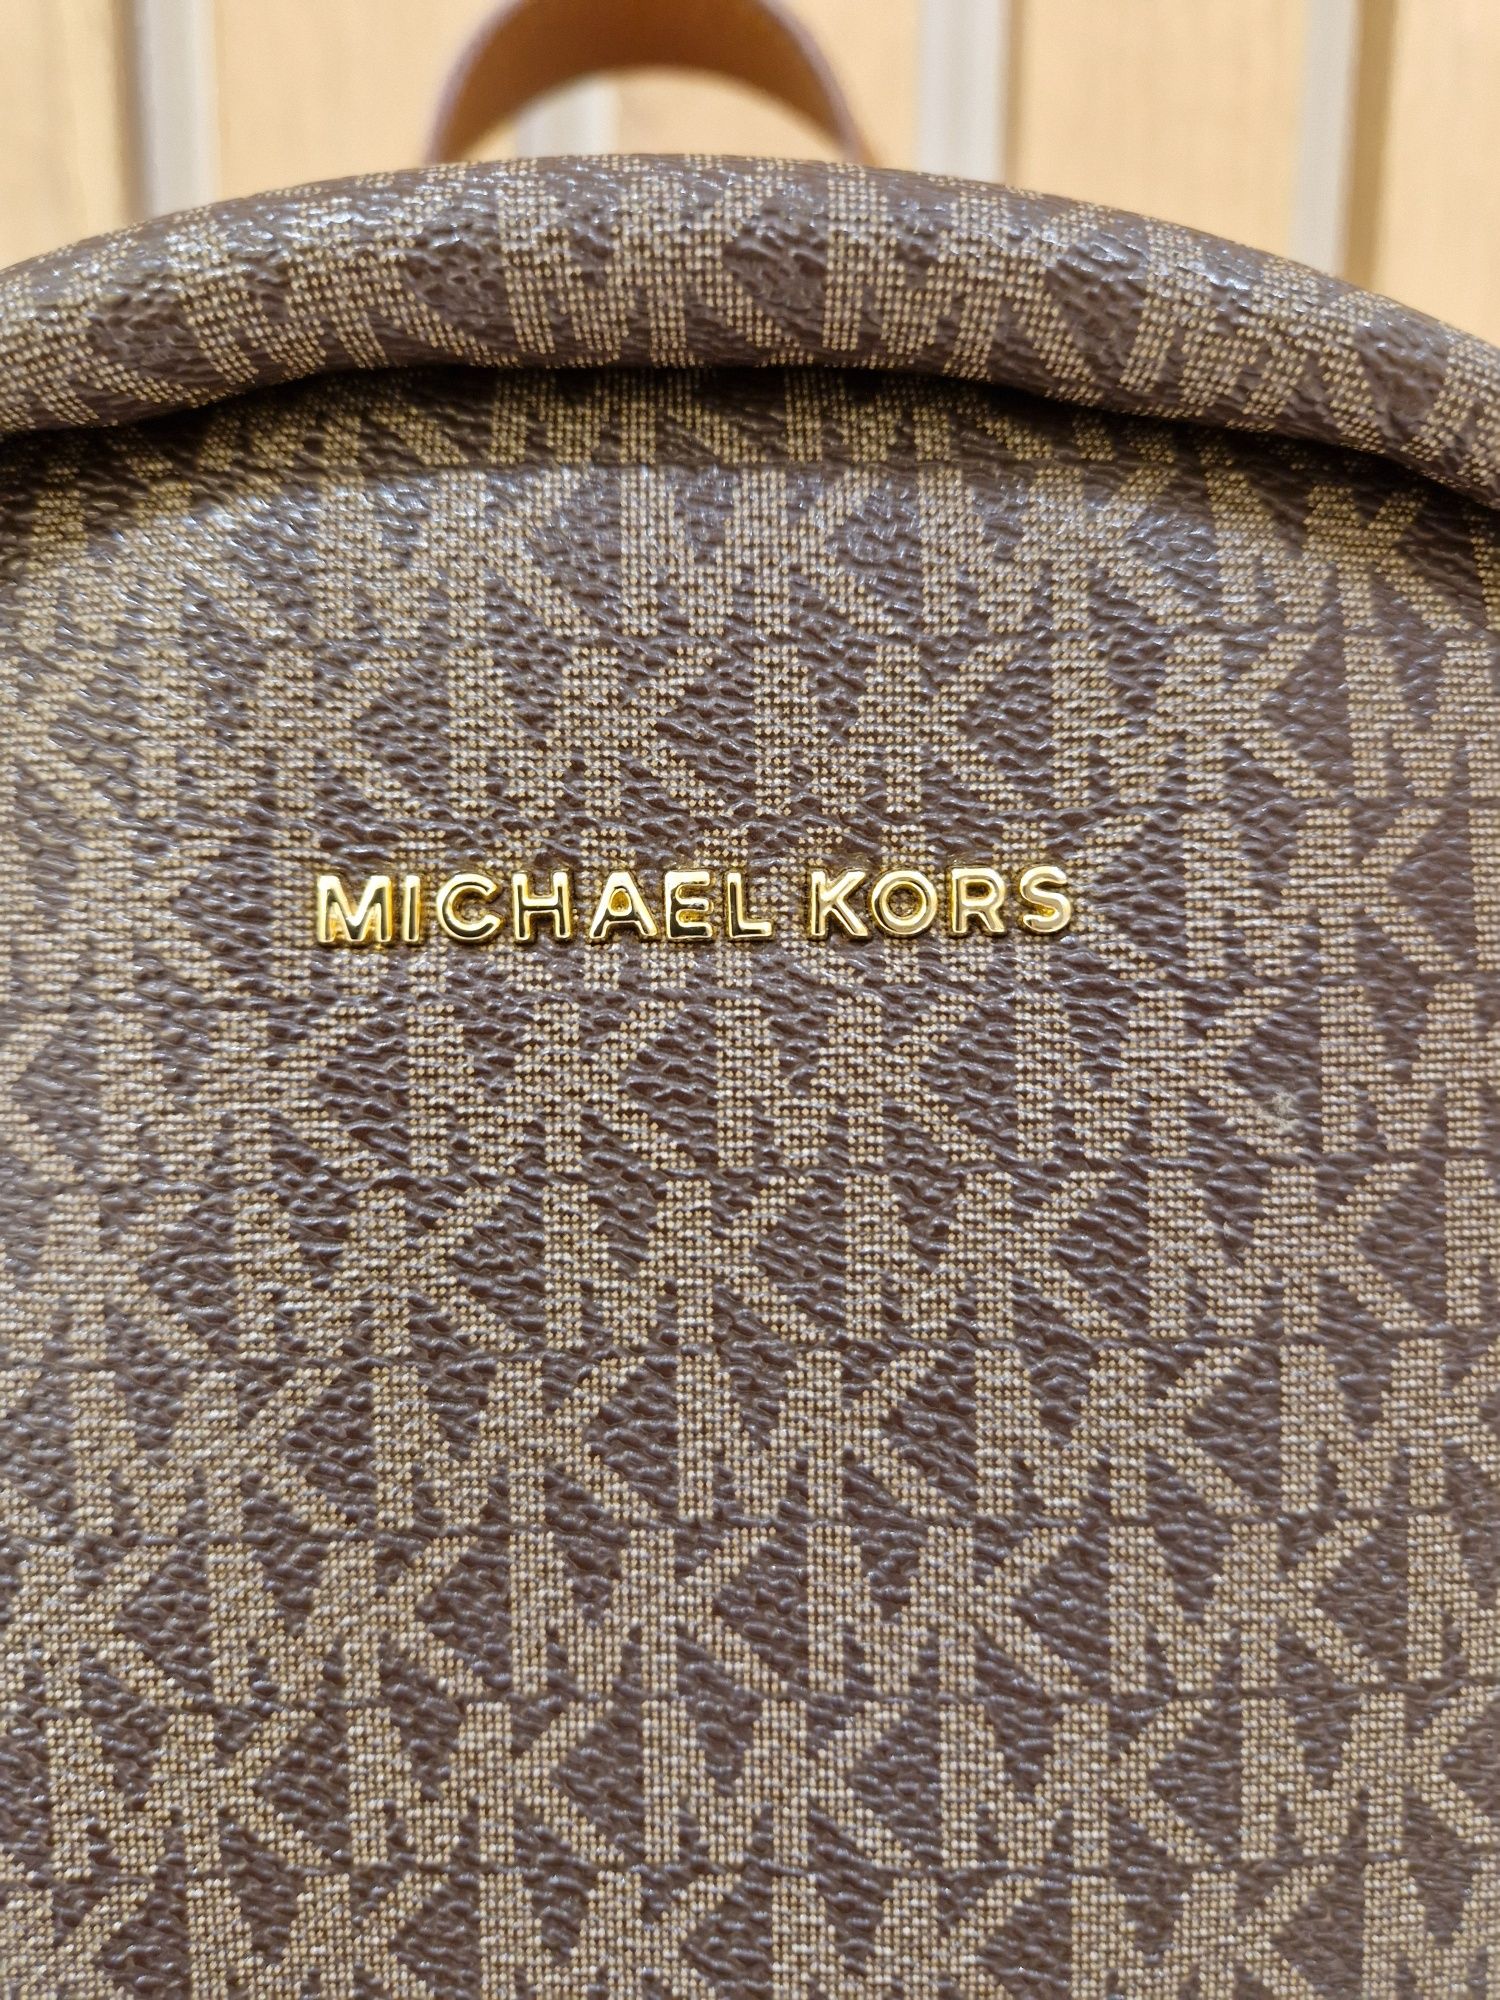 Женский рюкзак Michael Kors